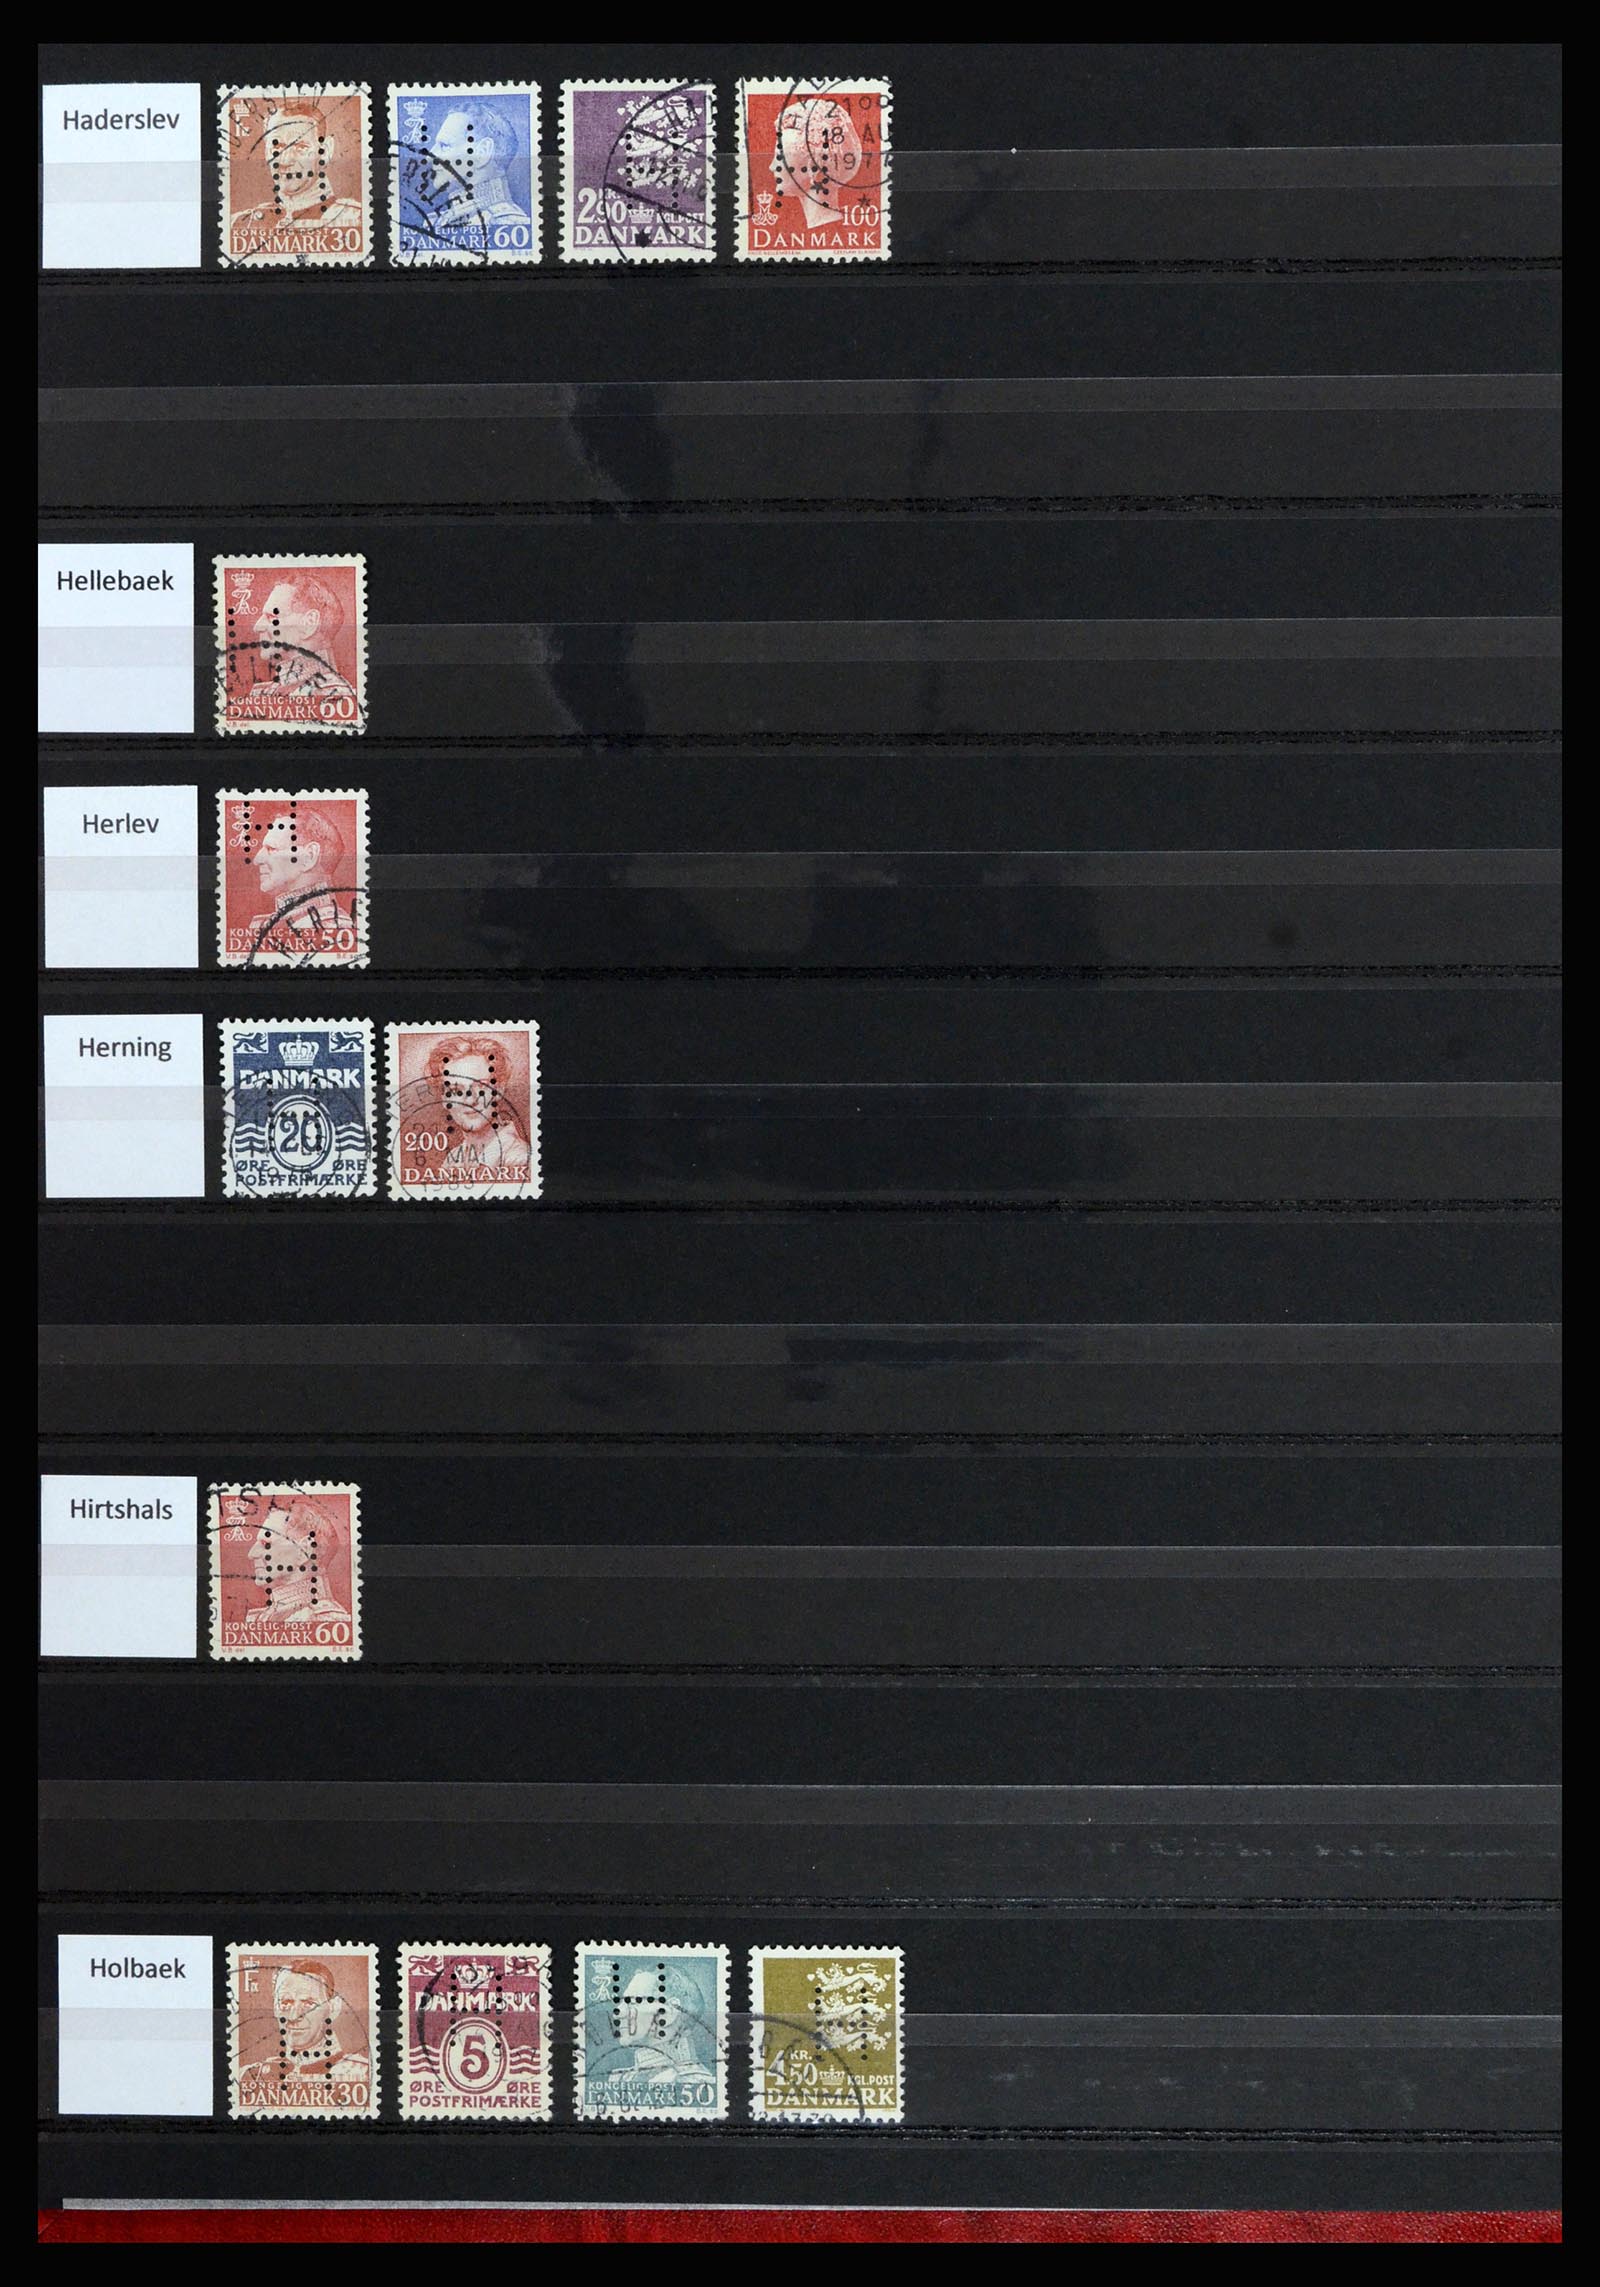 37056 004 - Stamp collection 37056 Denmark perfins.